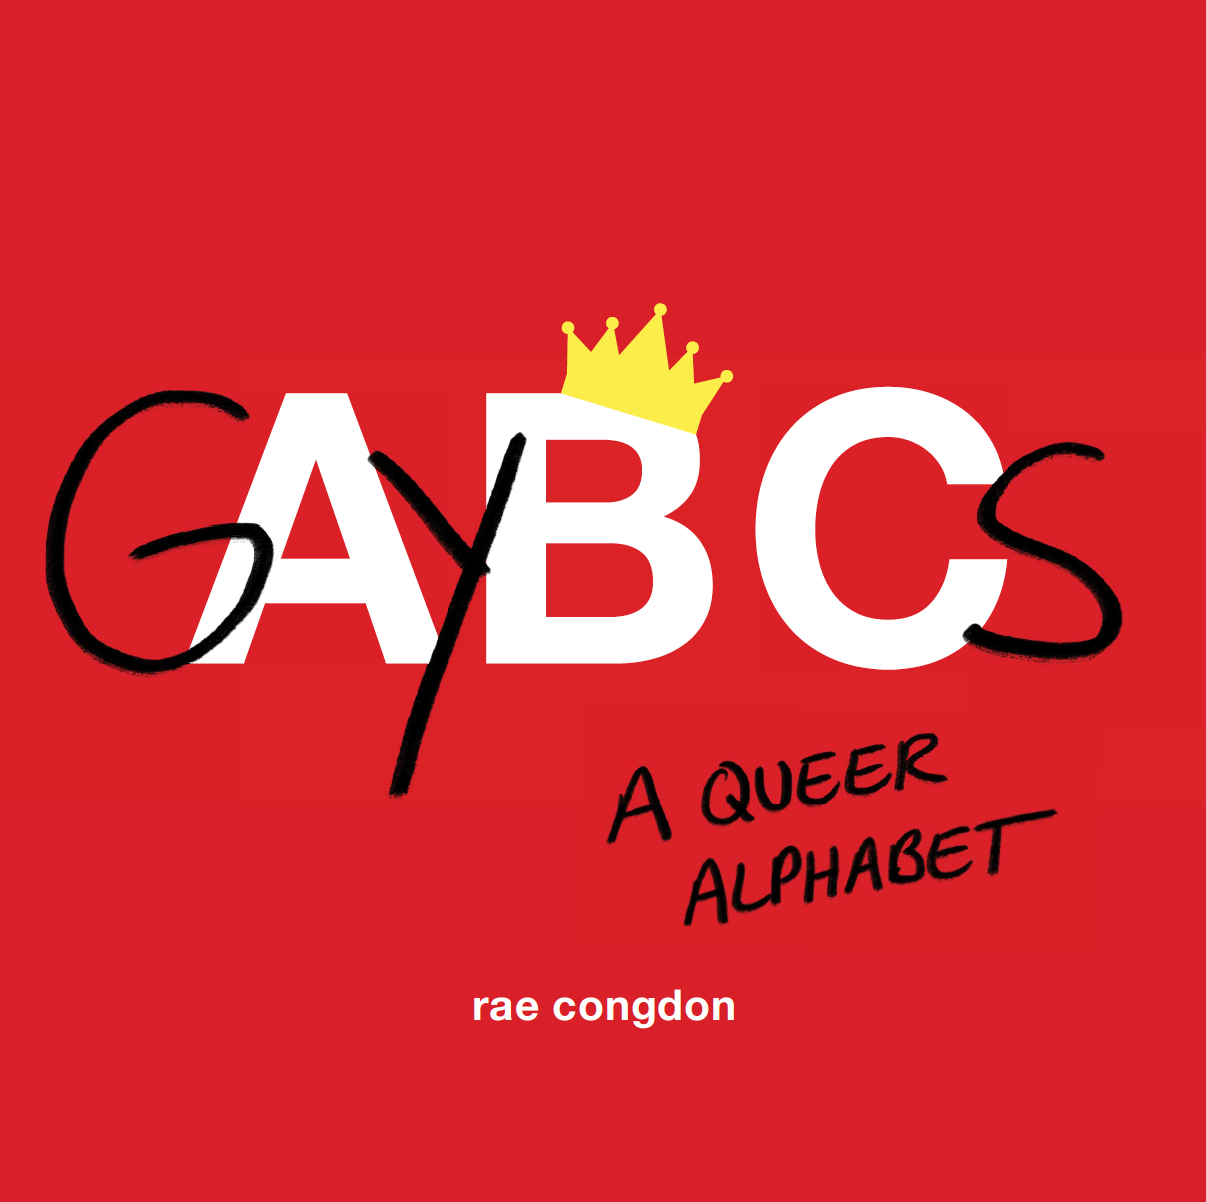 GayBCs: A Queer Alphabet